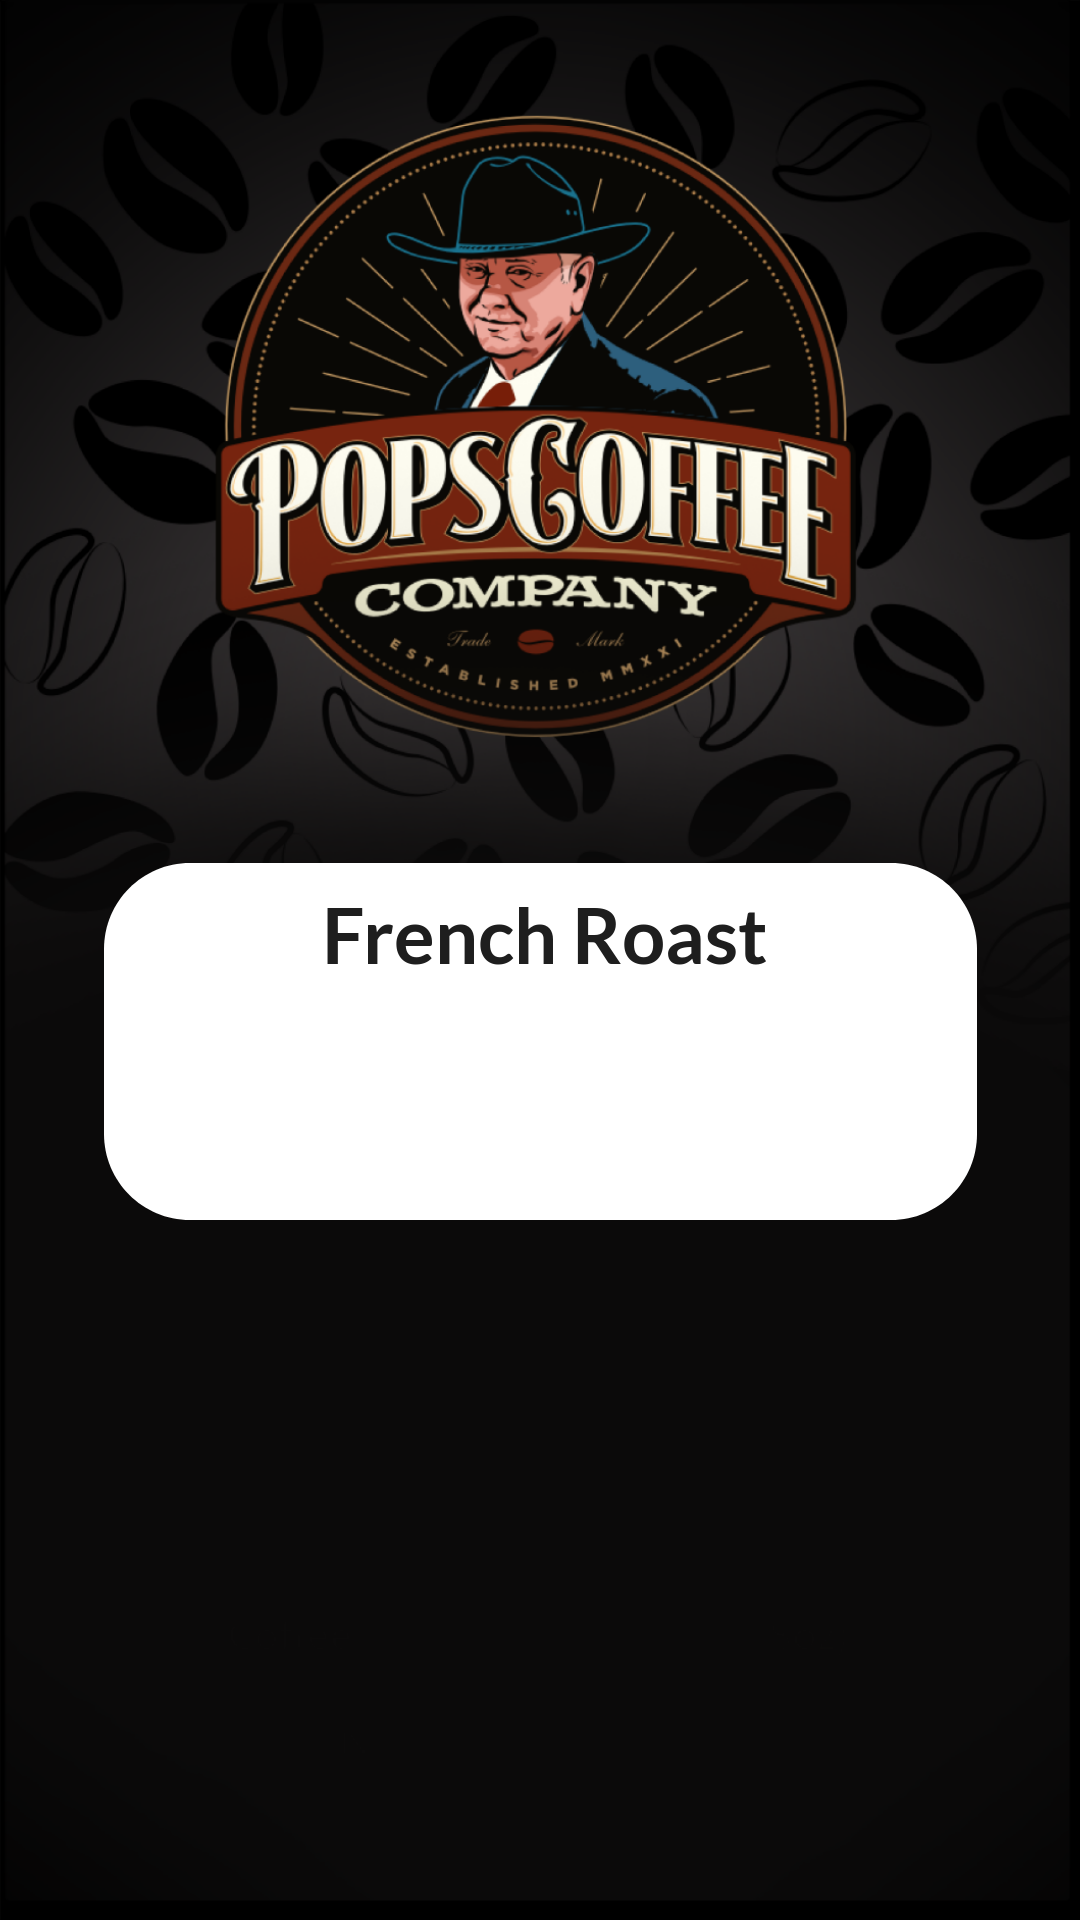 French Roast